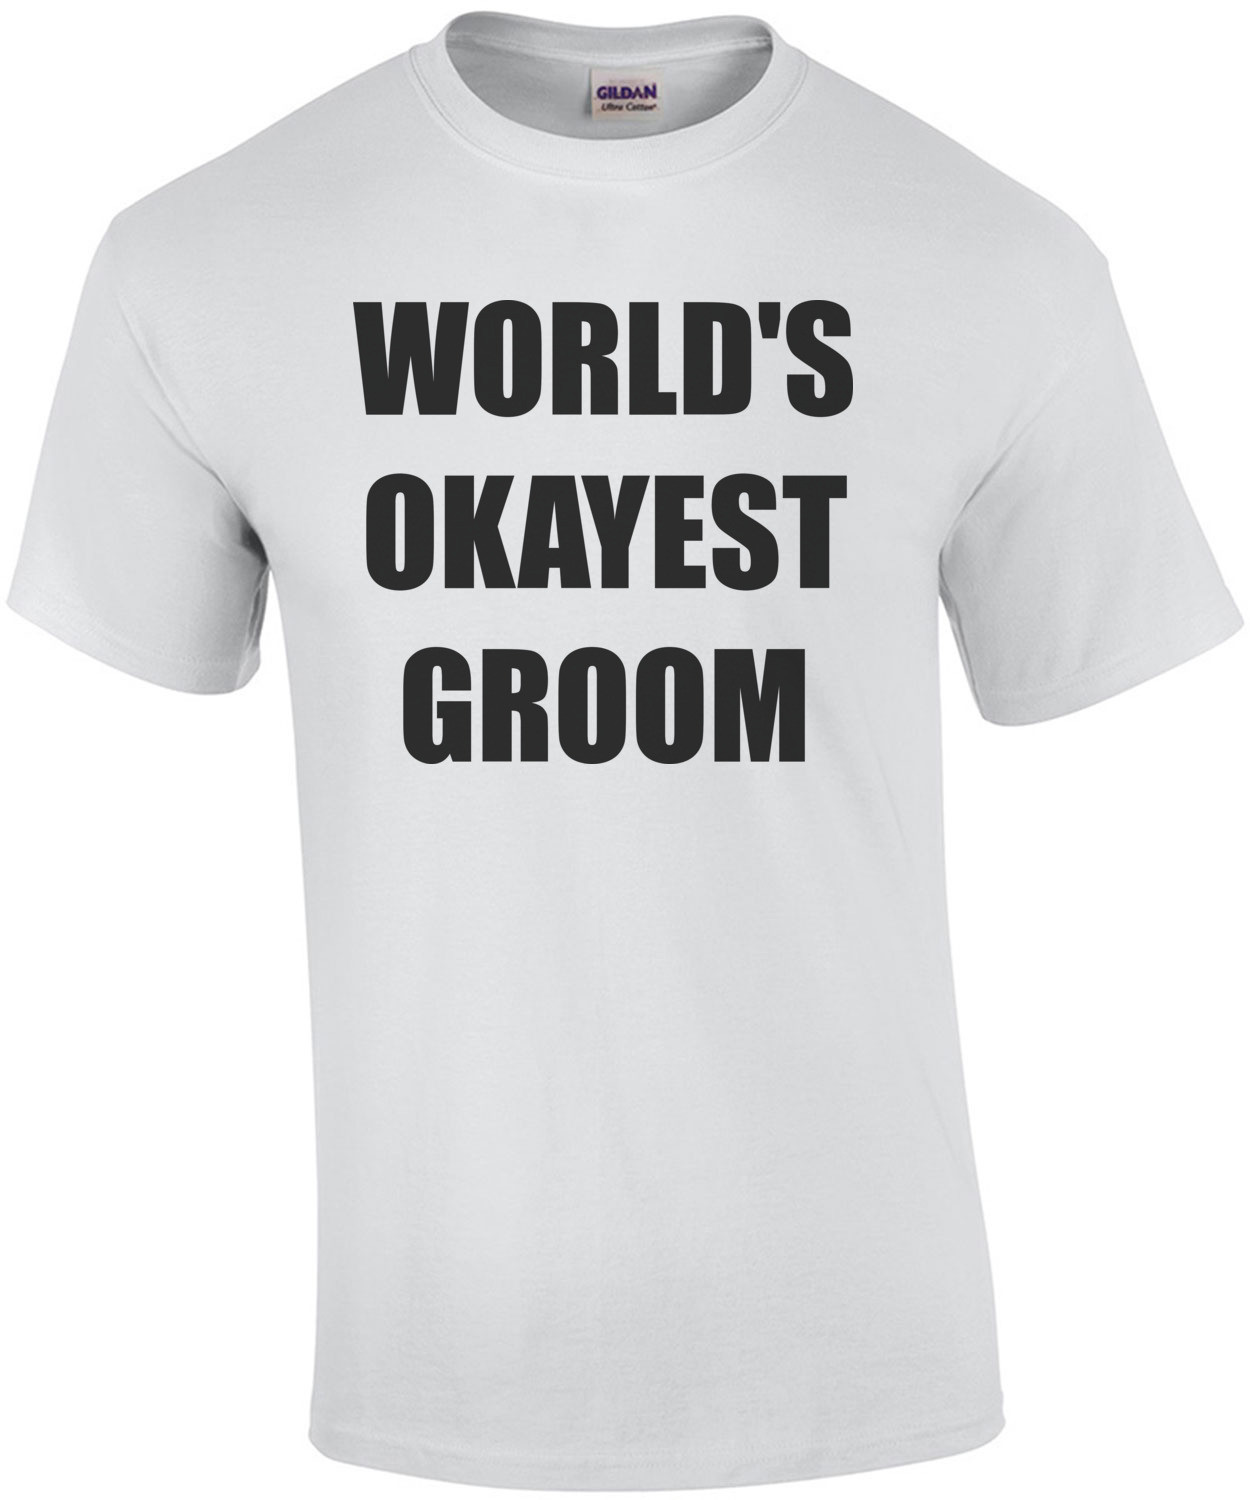 WORLD'S OKAYEST GROOM Shirt